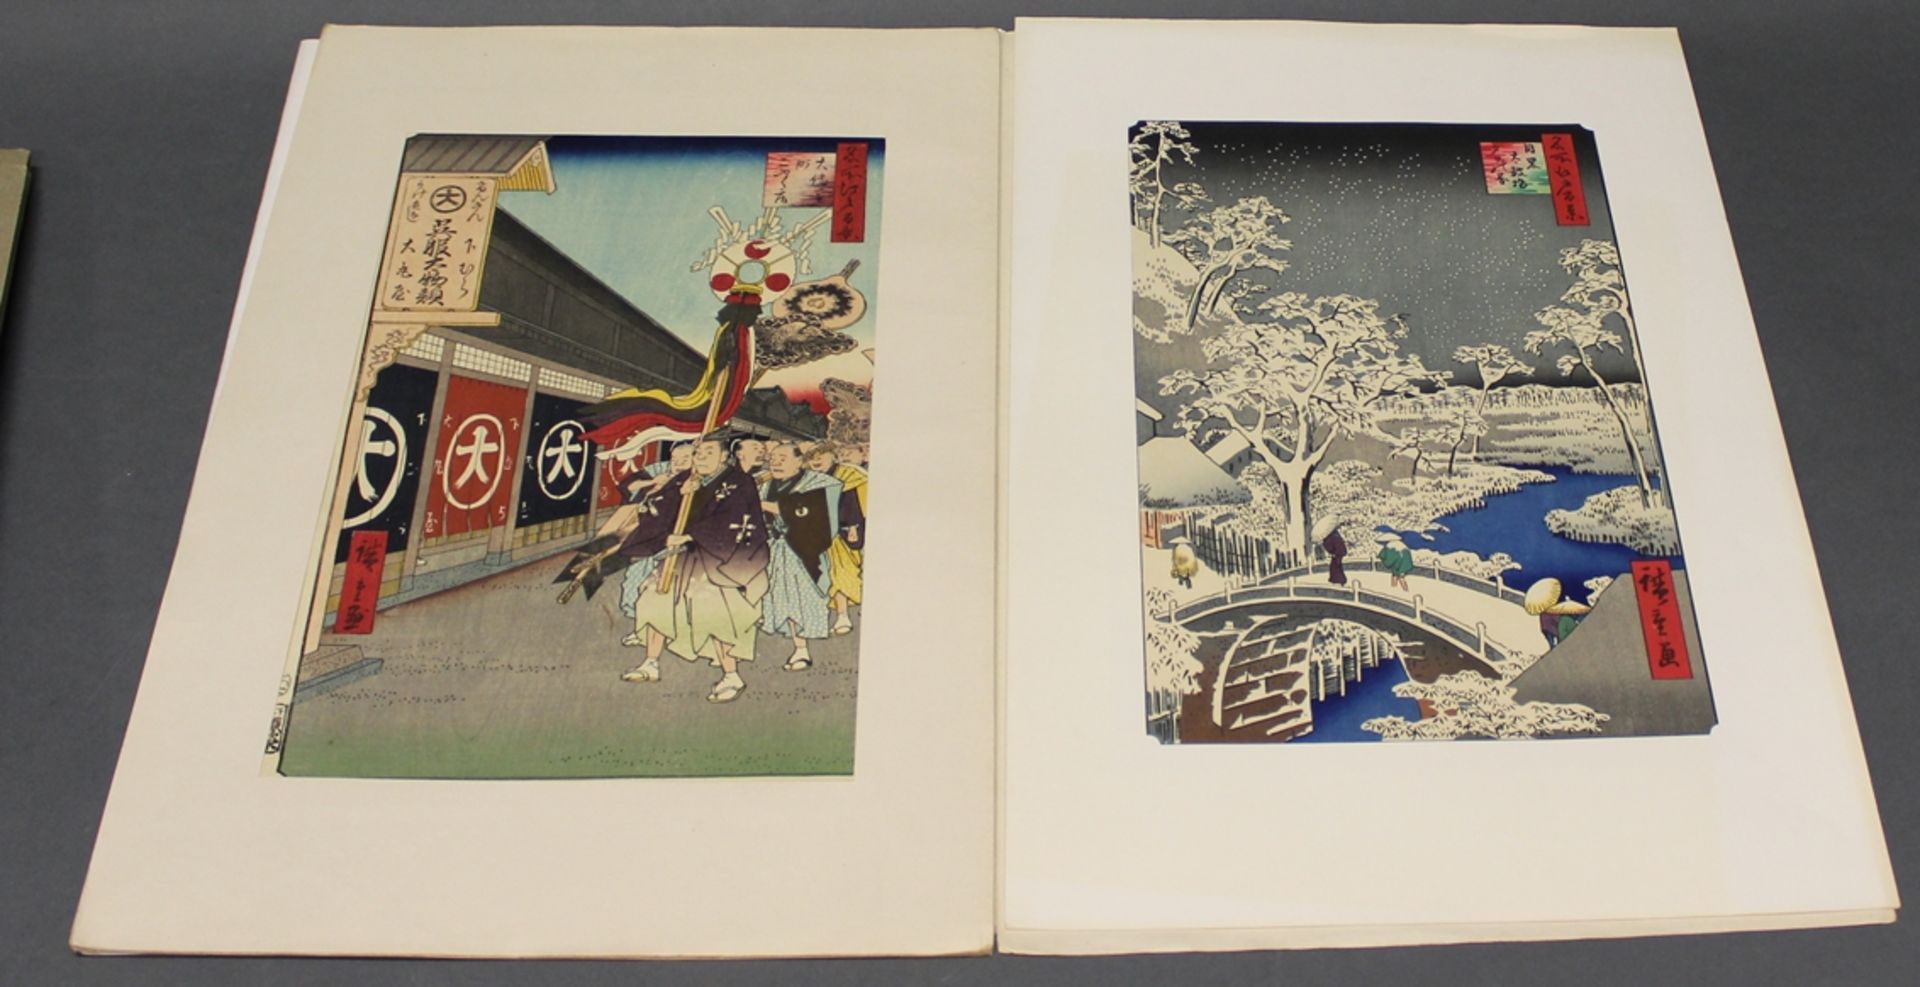 Konvolut, 3 Farbholzschnitte (Nachschnitte), Japan, 20. Jh., diverse Motive, Utagawa, Hiroshige